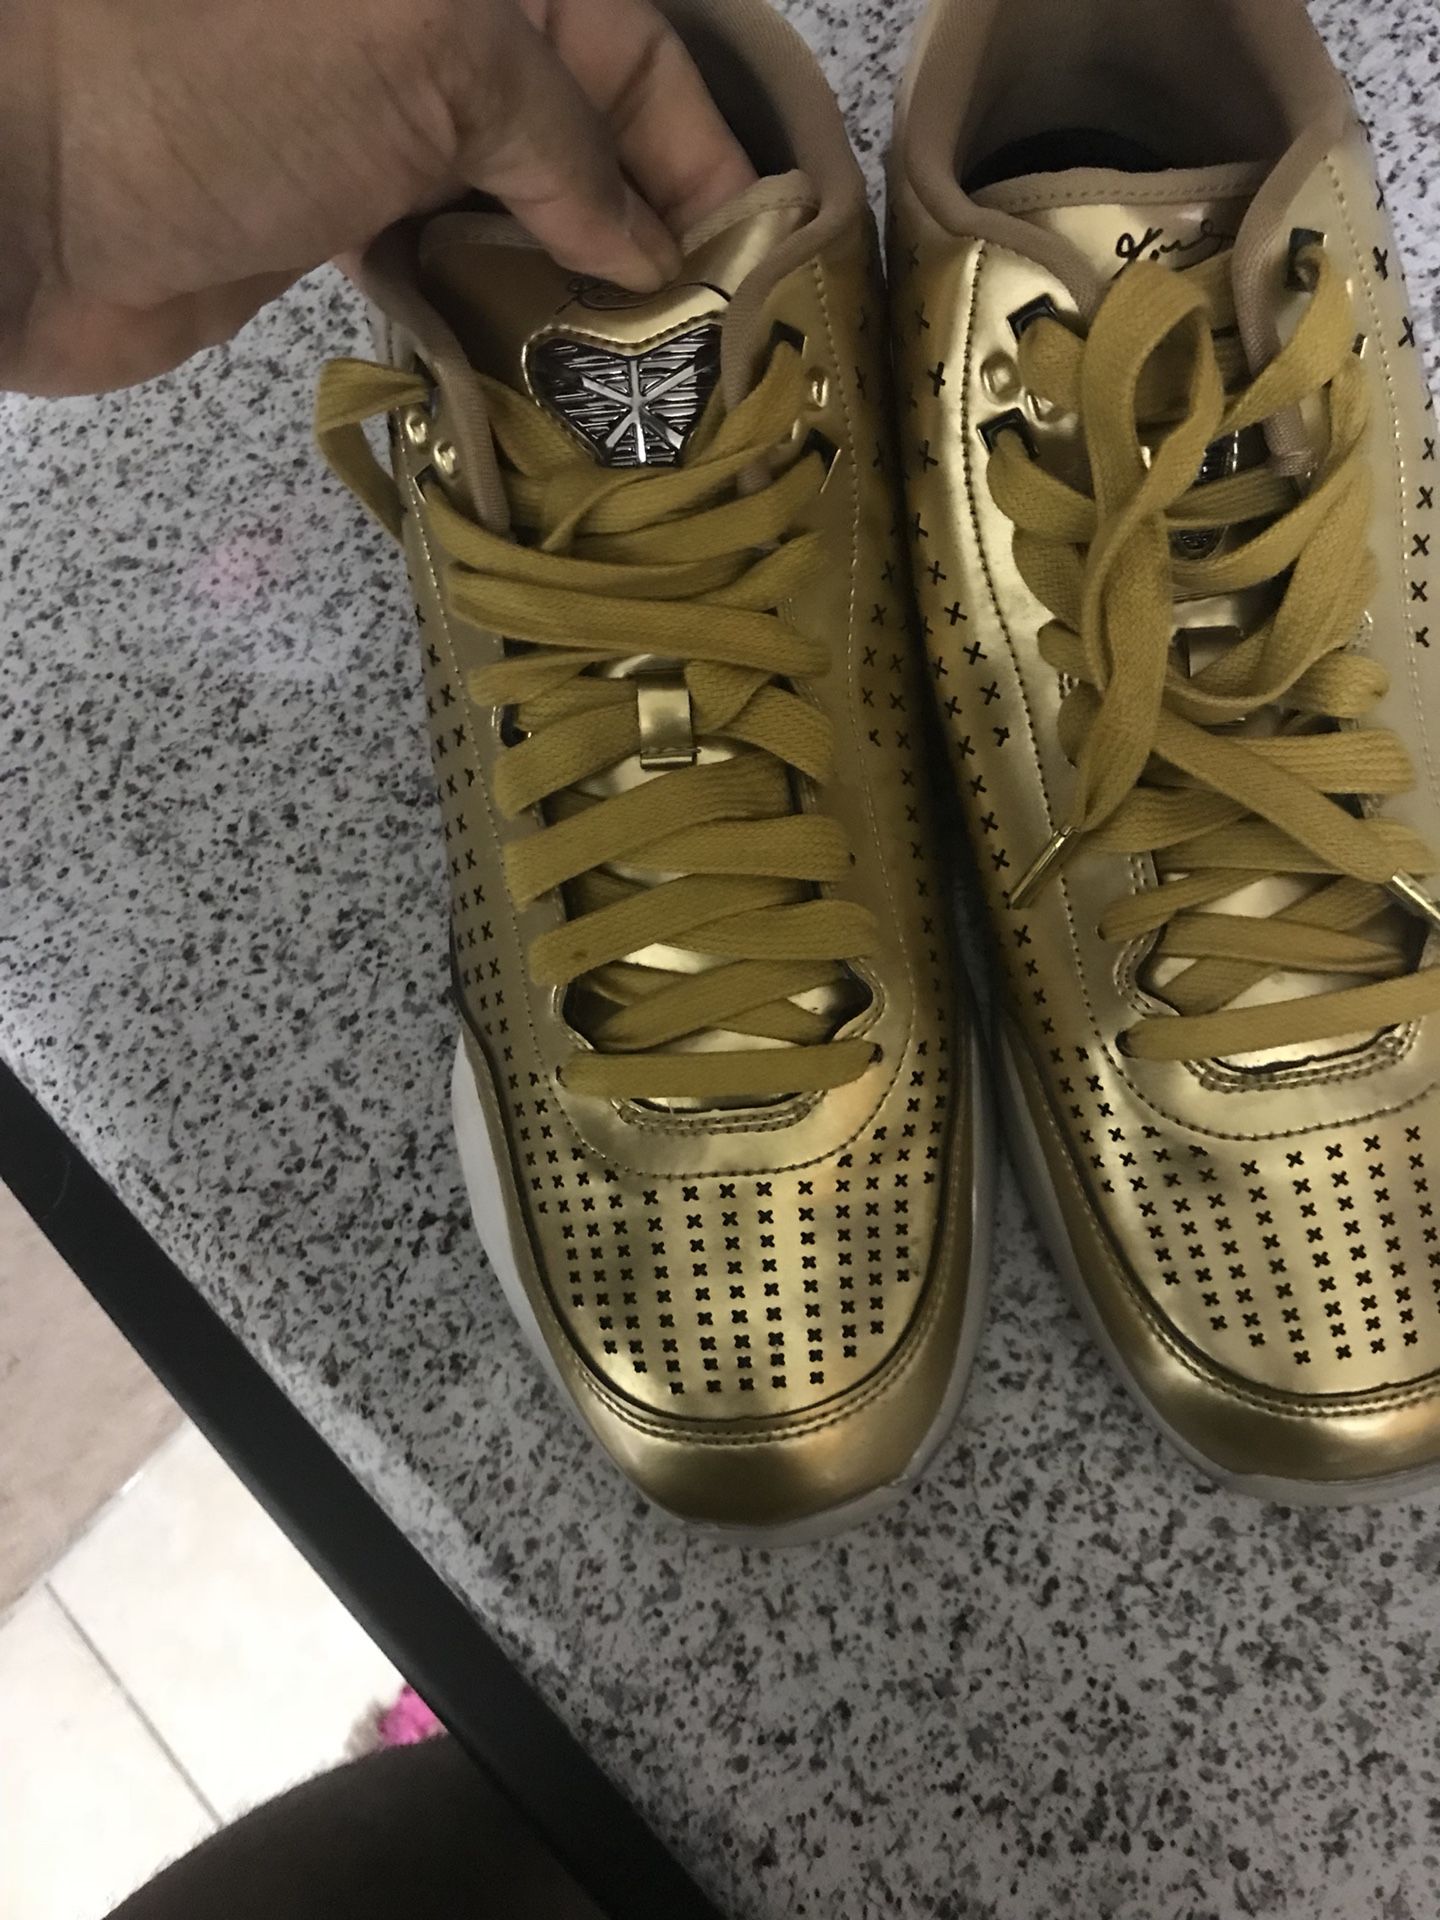 Nike Kobe 10 liquid gold size 11